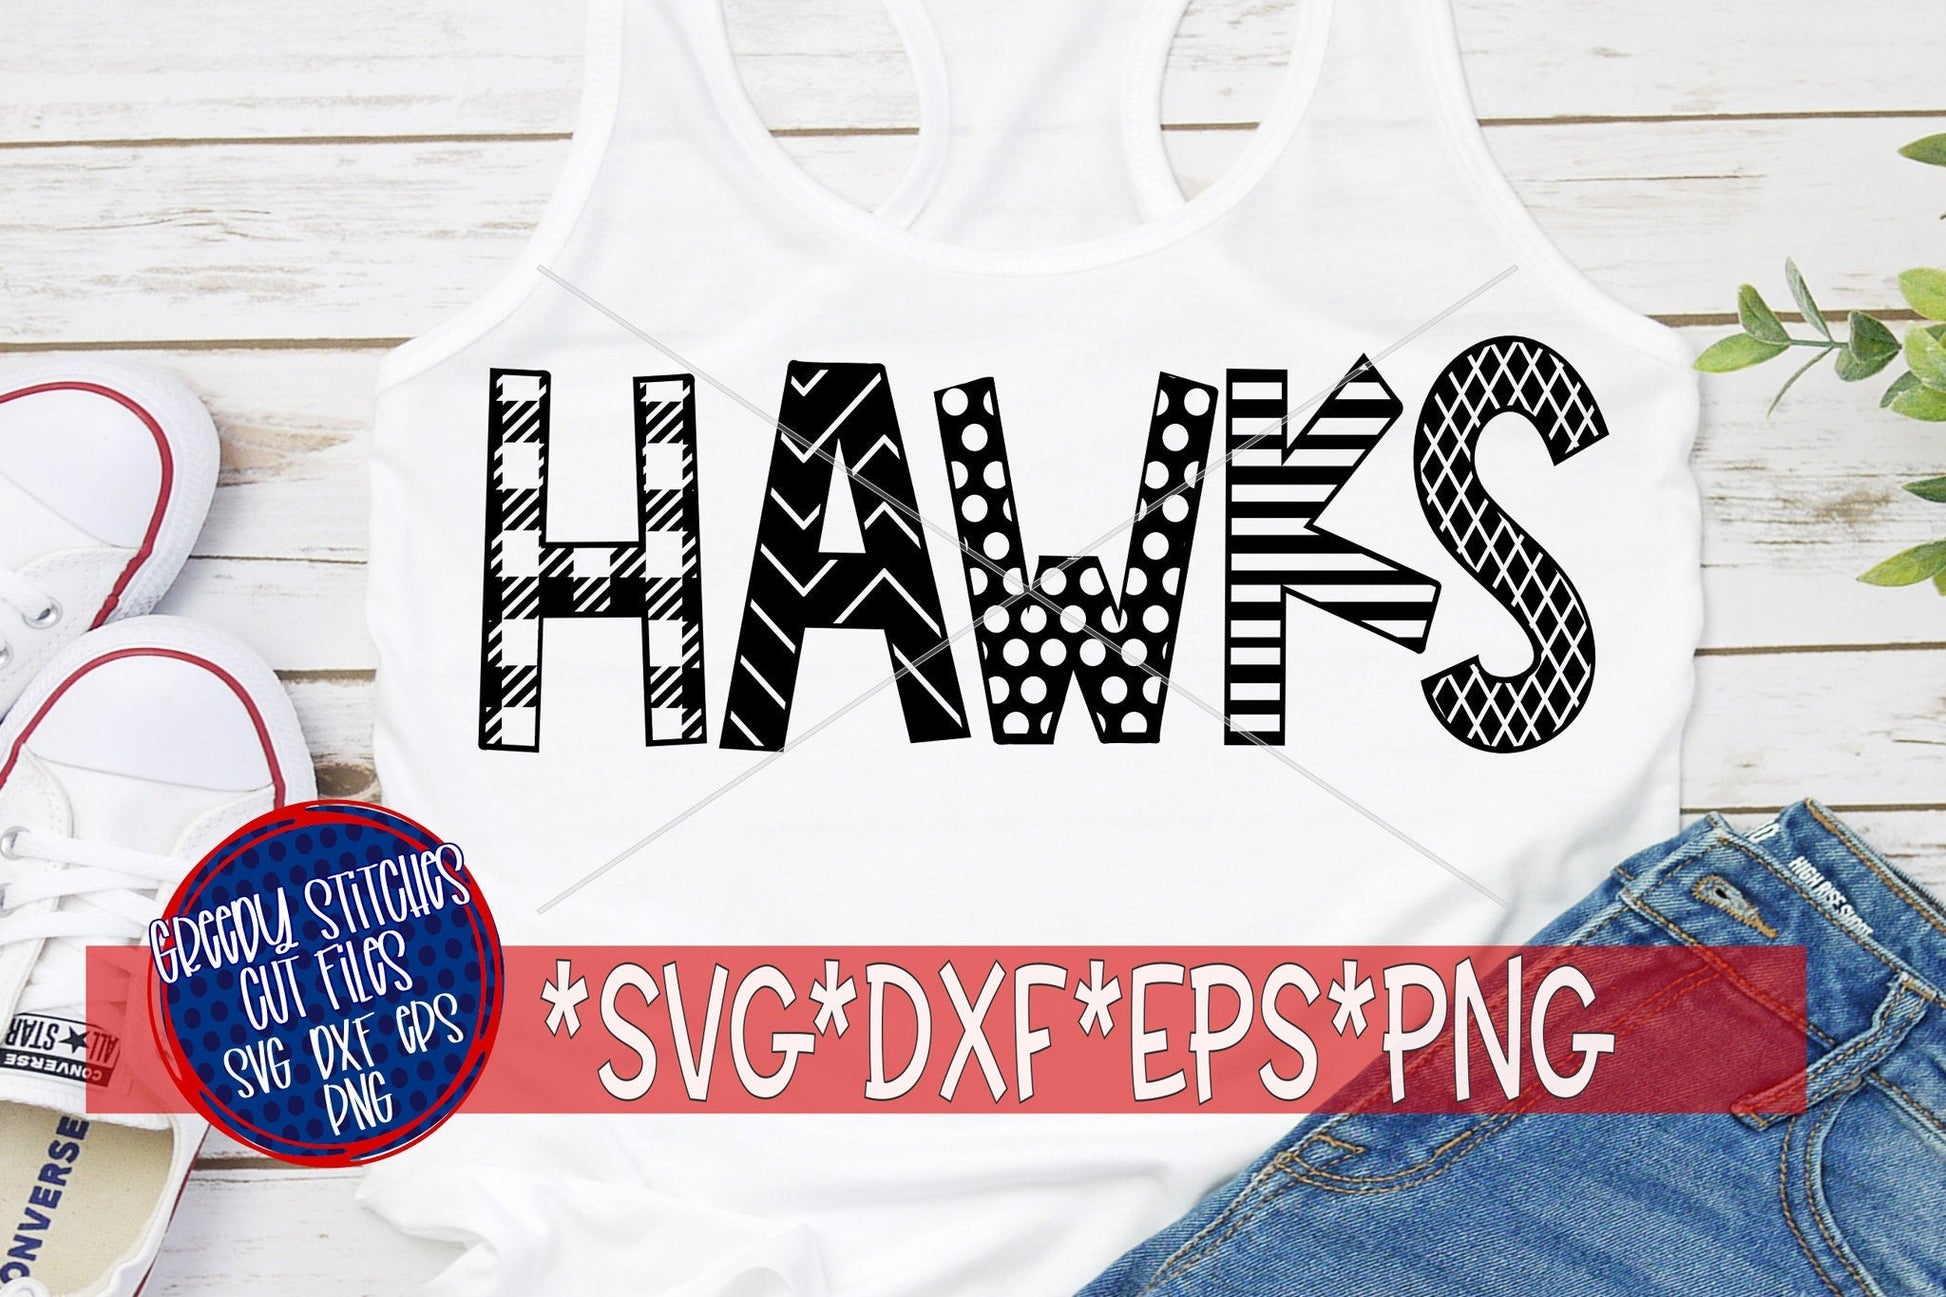 Hawks SvG | Hawks svg dxf eps png. Hawks word art SvG | Hawks word art DxF | Hawks SvG | Hawks word art EpS | Instant Download Cut File